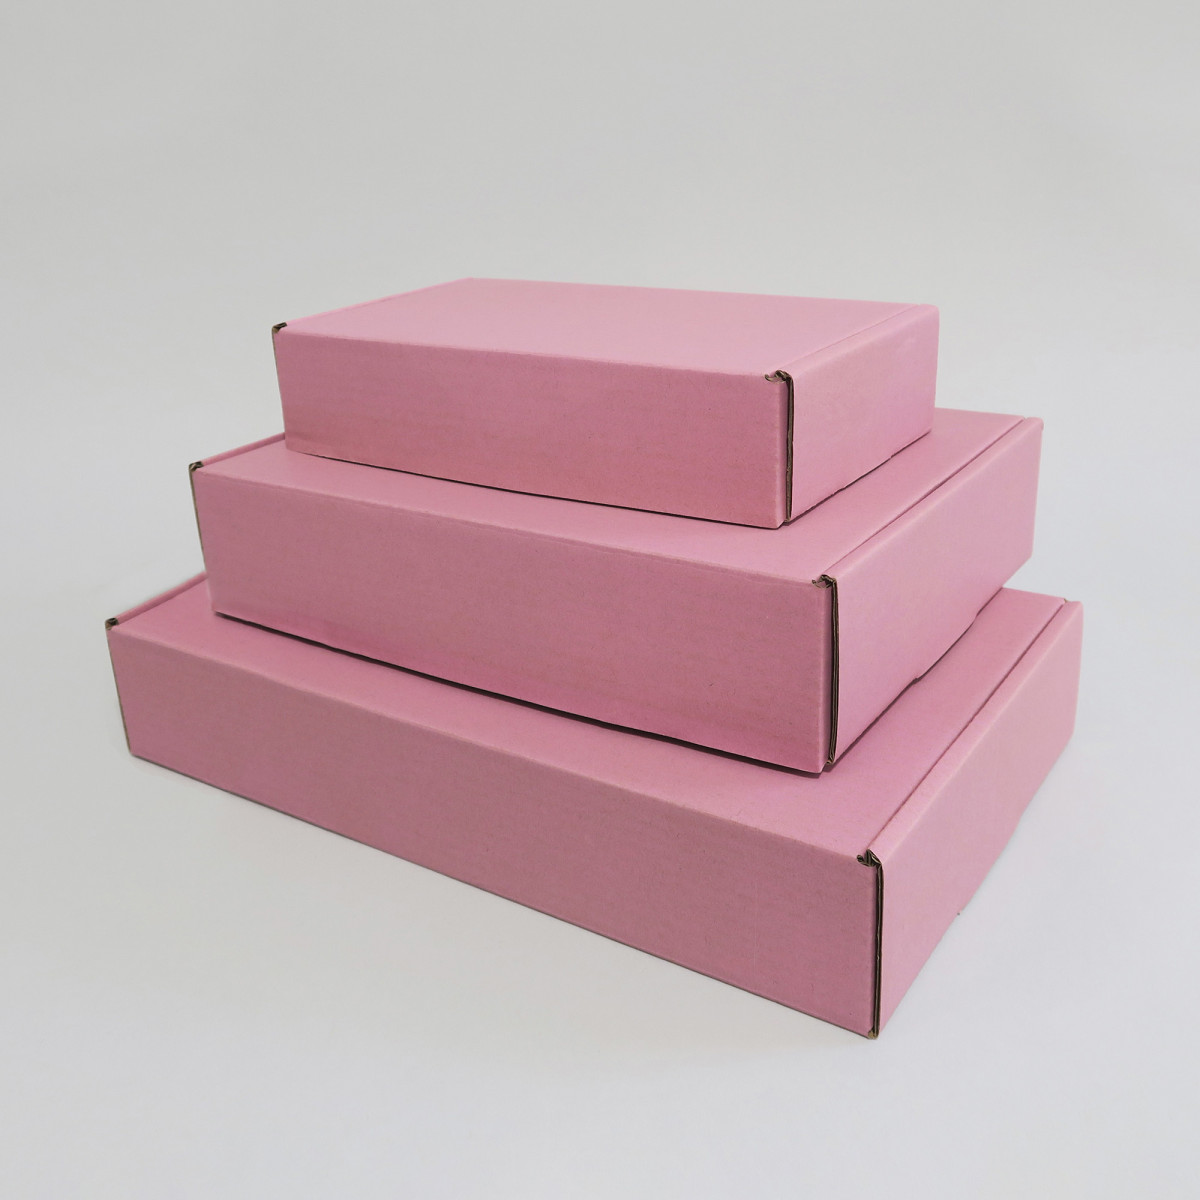 Caja autoarmable 25x20x7 rosa